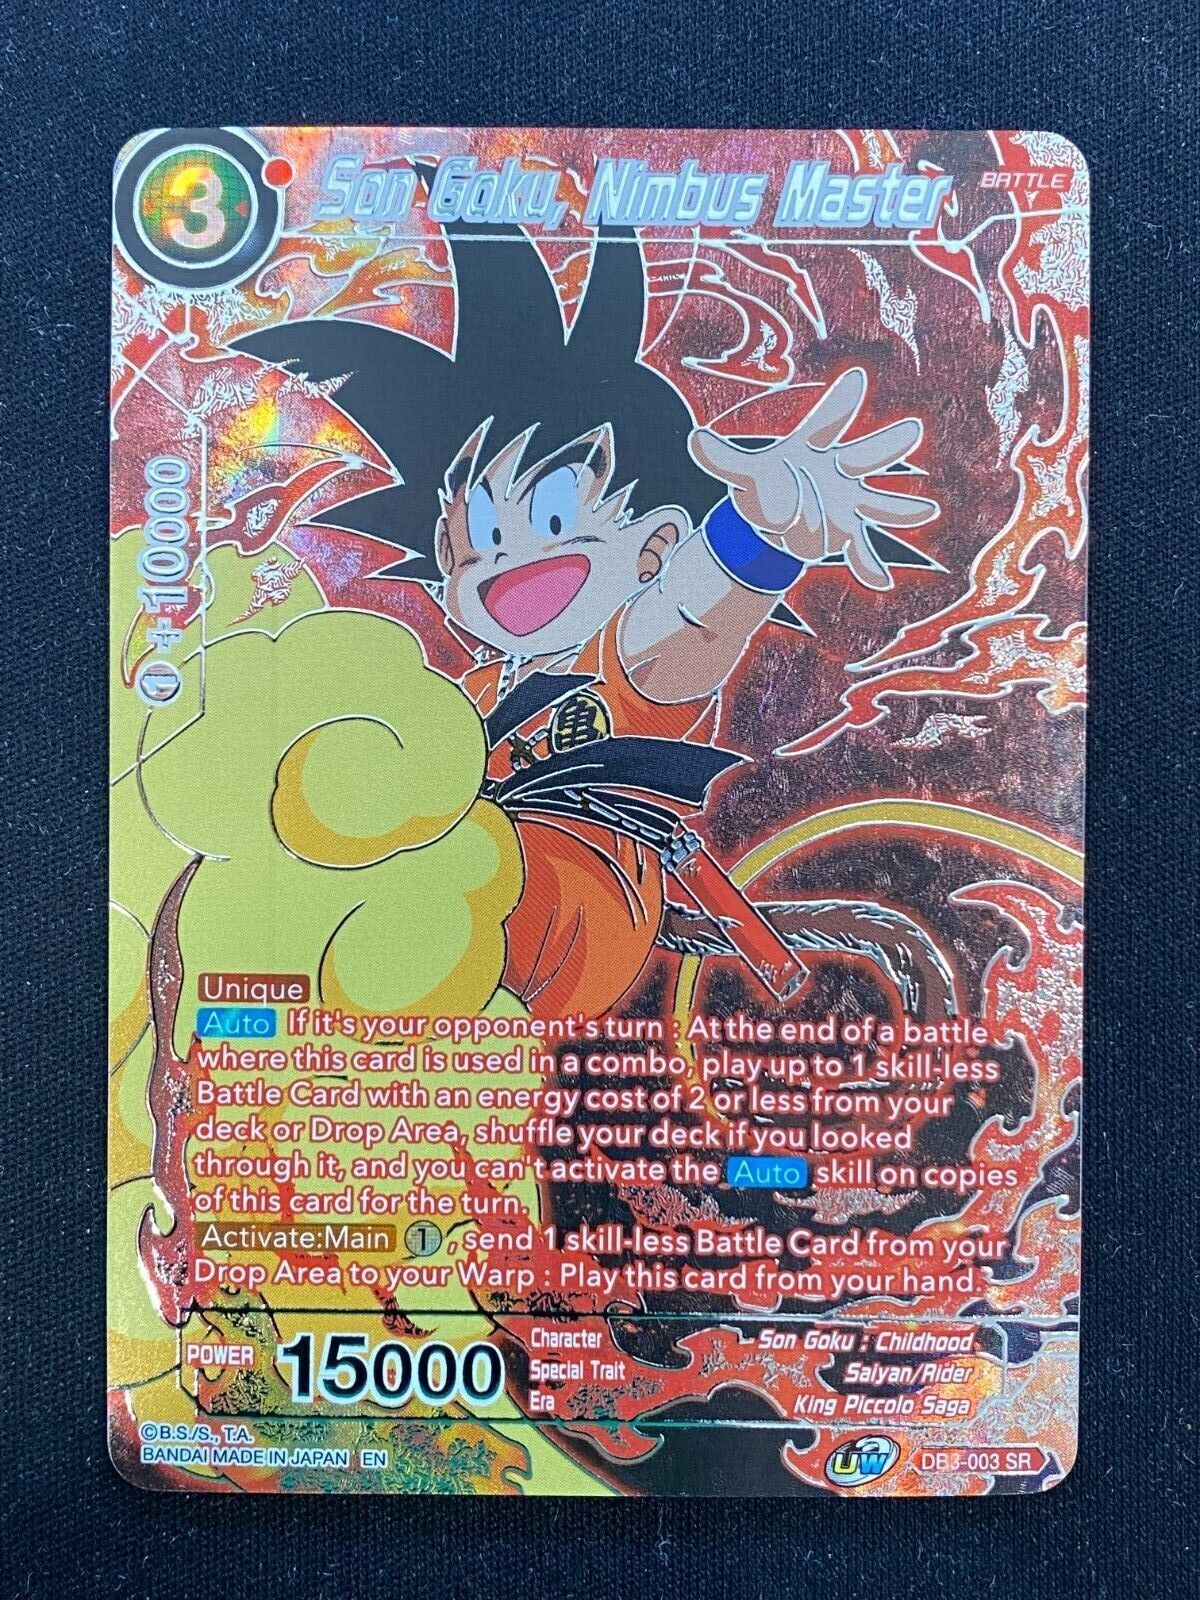 Son Goku, Nimbus Master (DB3-003 SR) Collectors Selection Vol 2 DBS